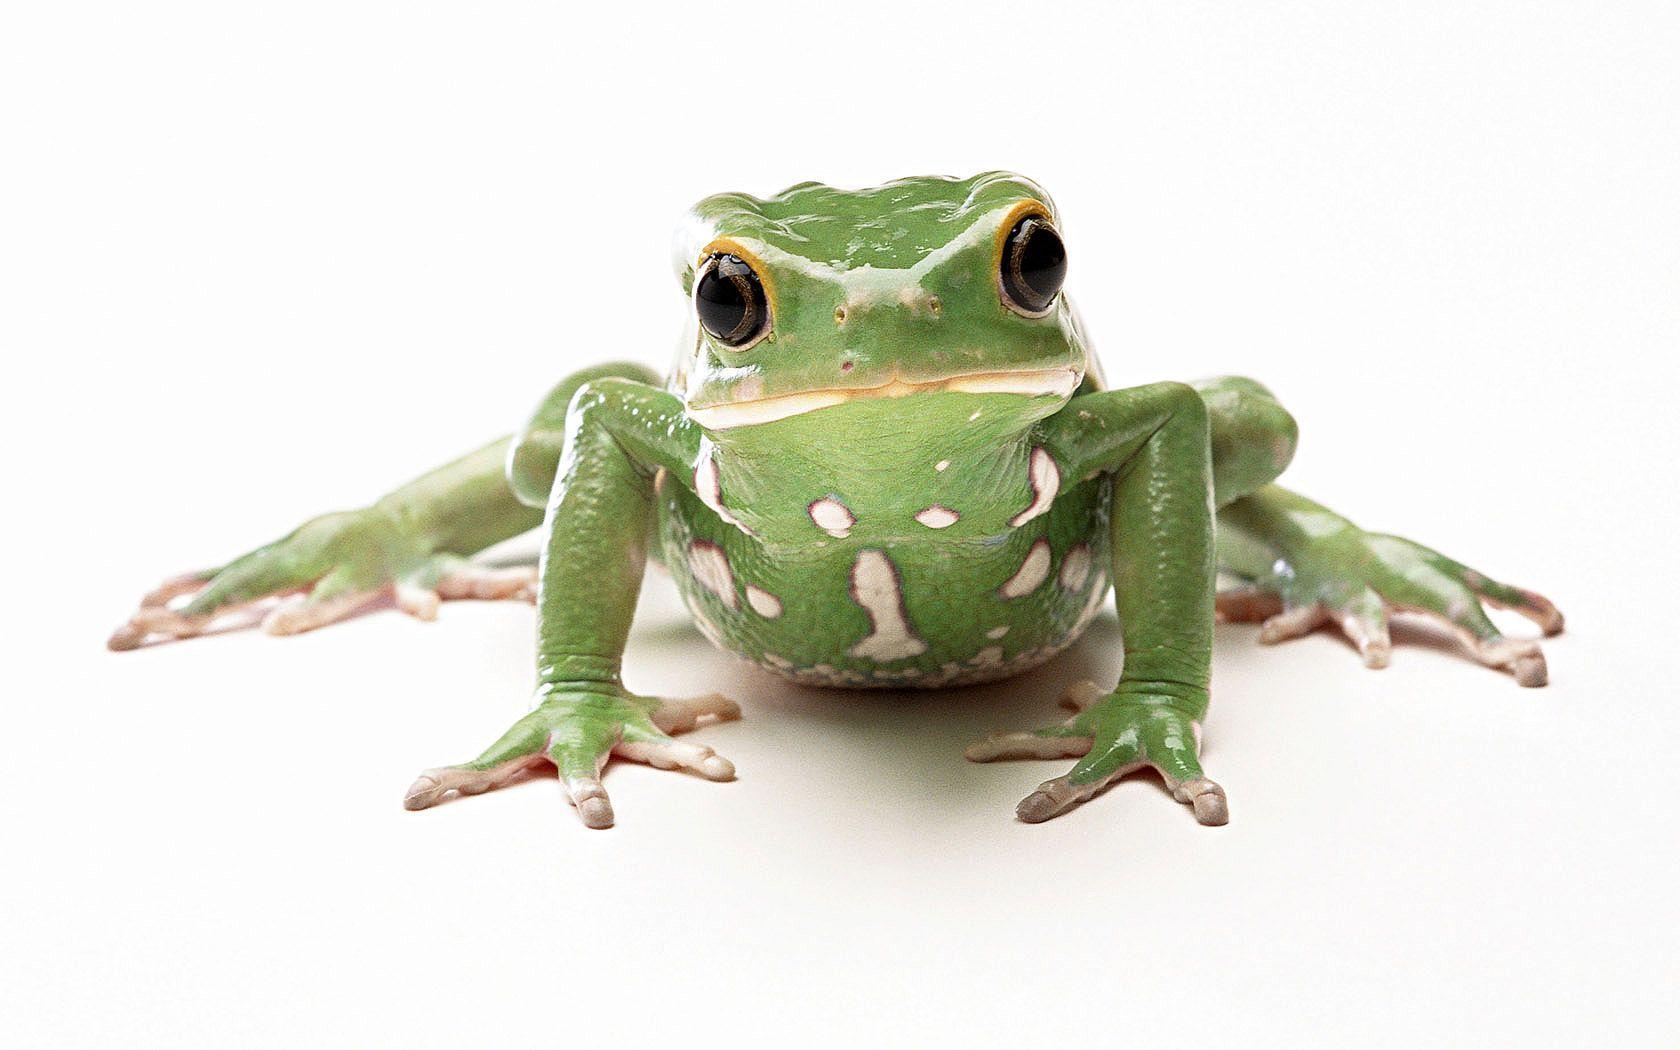 Frog on white background close up image free desktop background